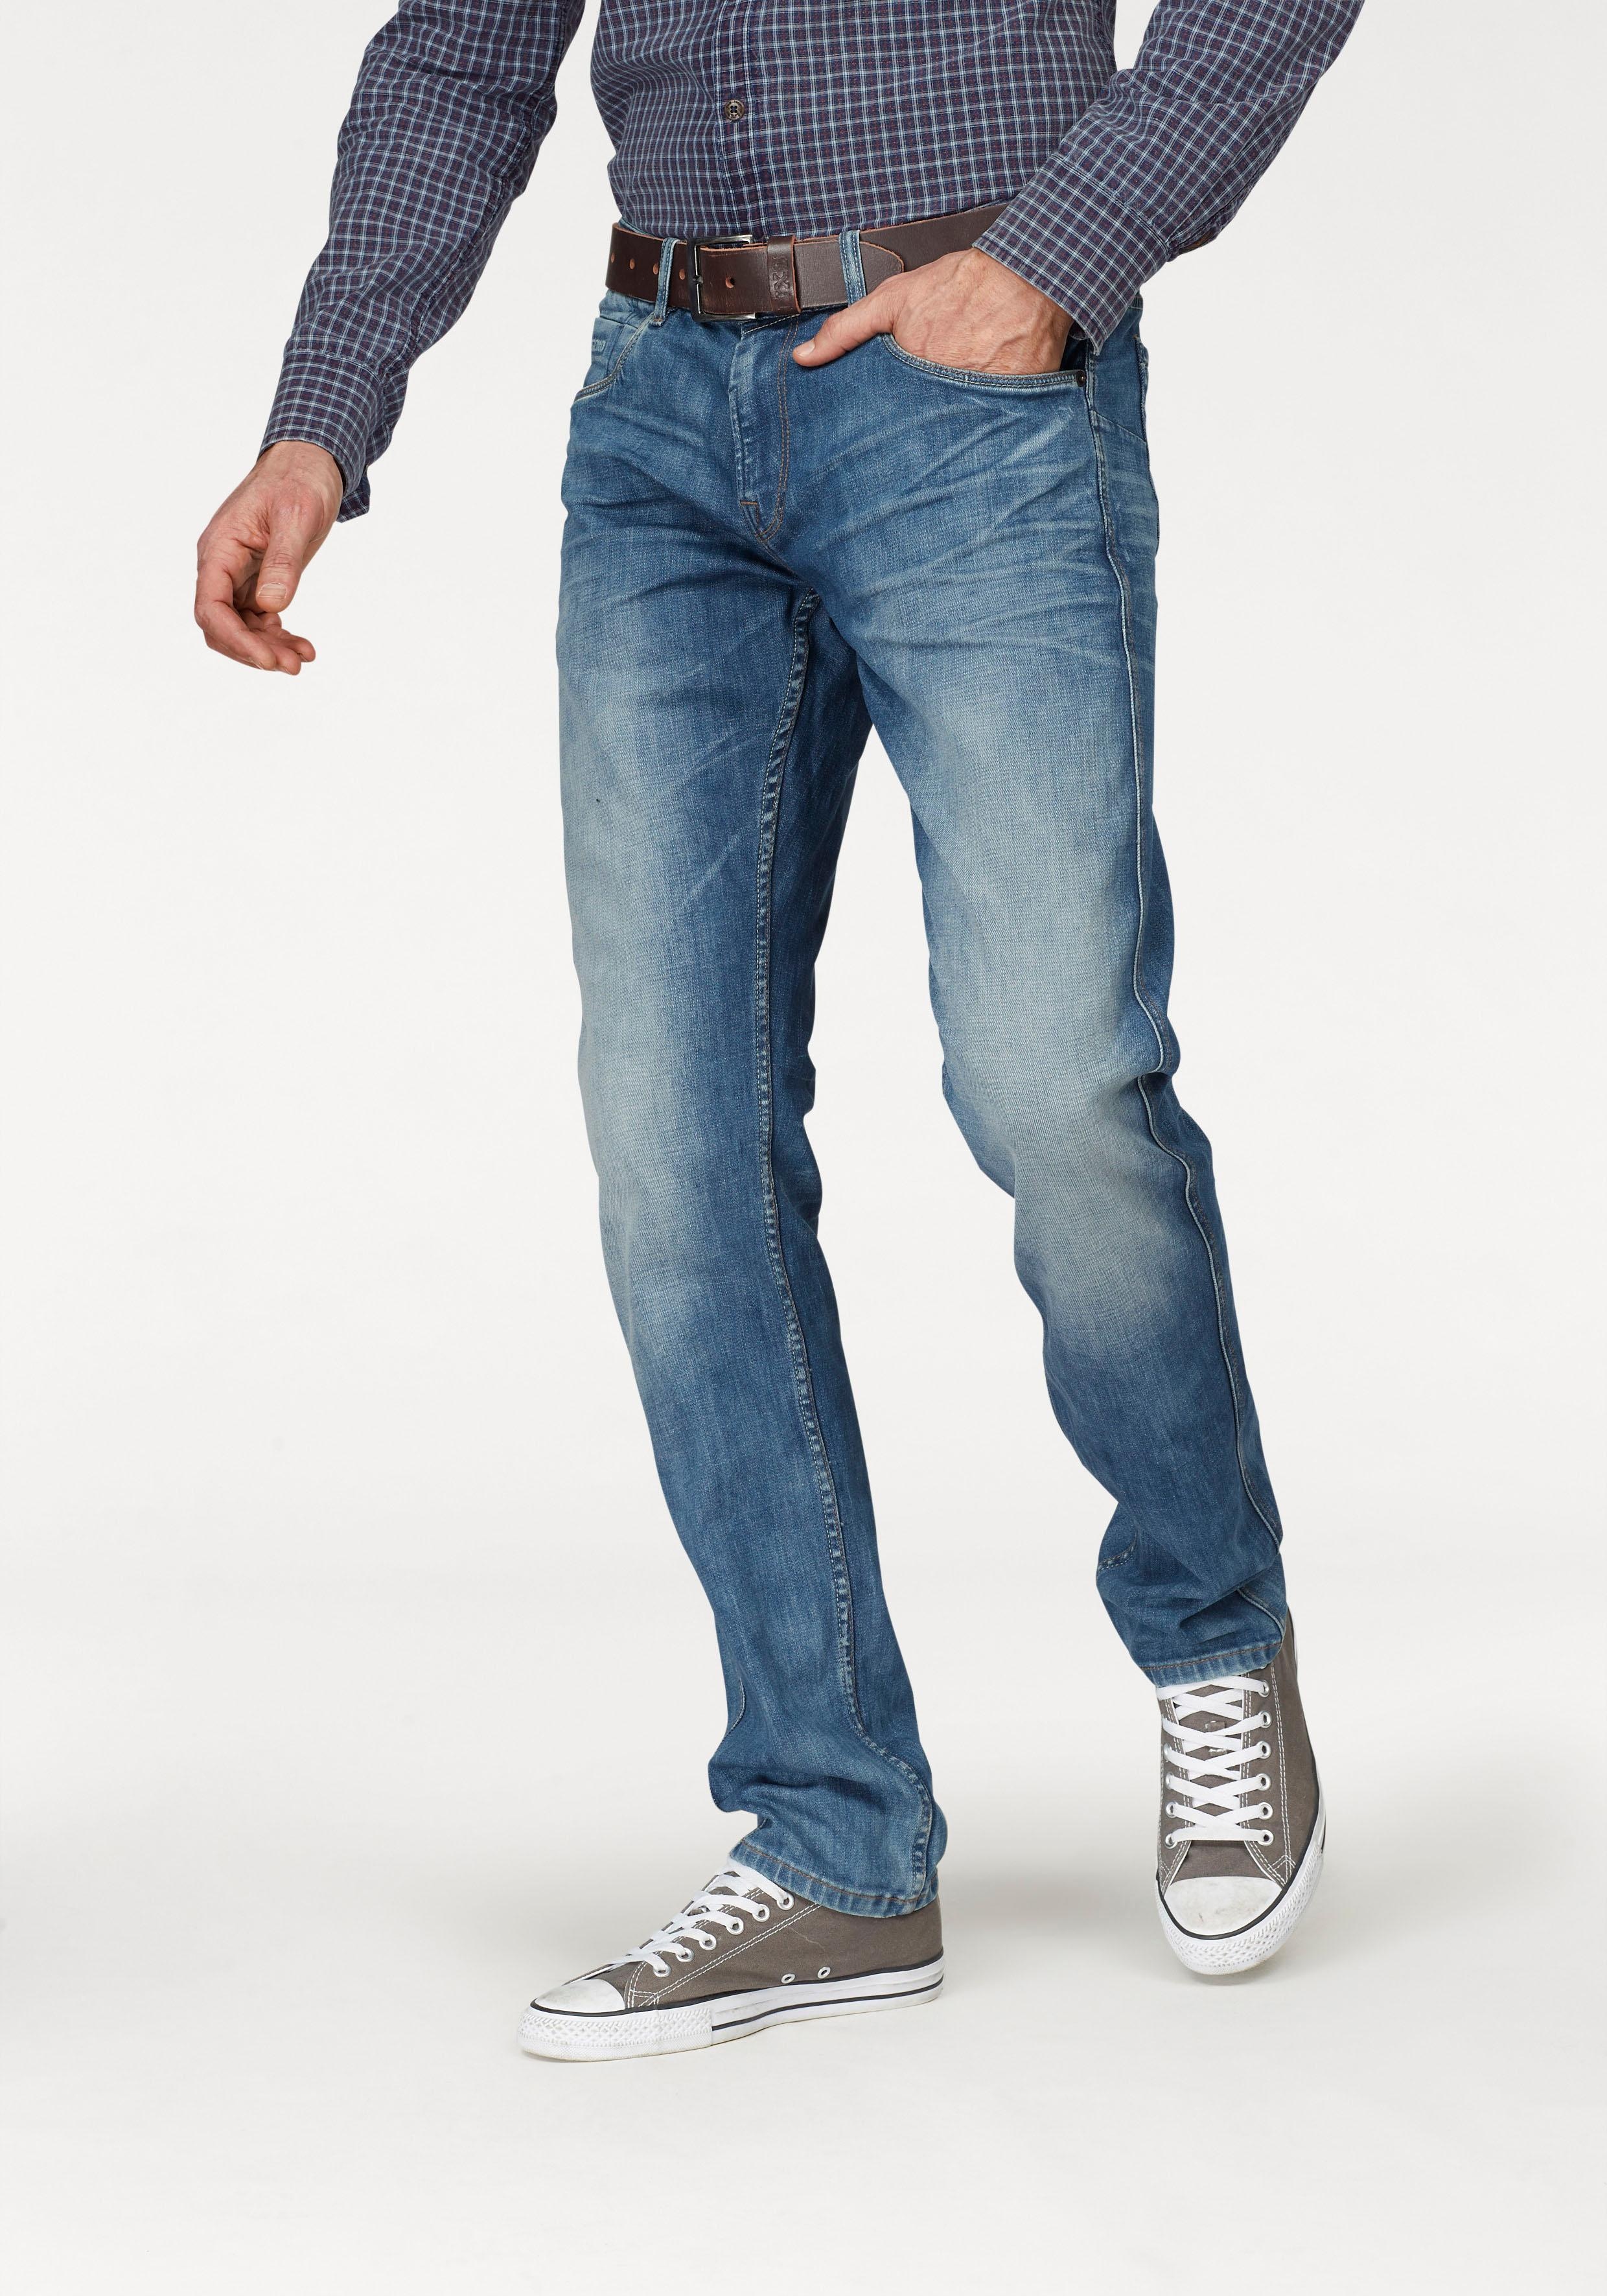 Regular-fit-Jeans PME LEGEND "Legend Nightflight" Gr. 38, Länge 30, blau (blue) Herren Jeans Regular Fit Bestseller